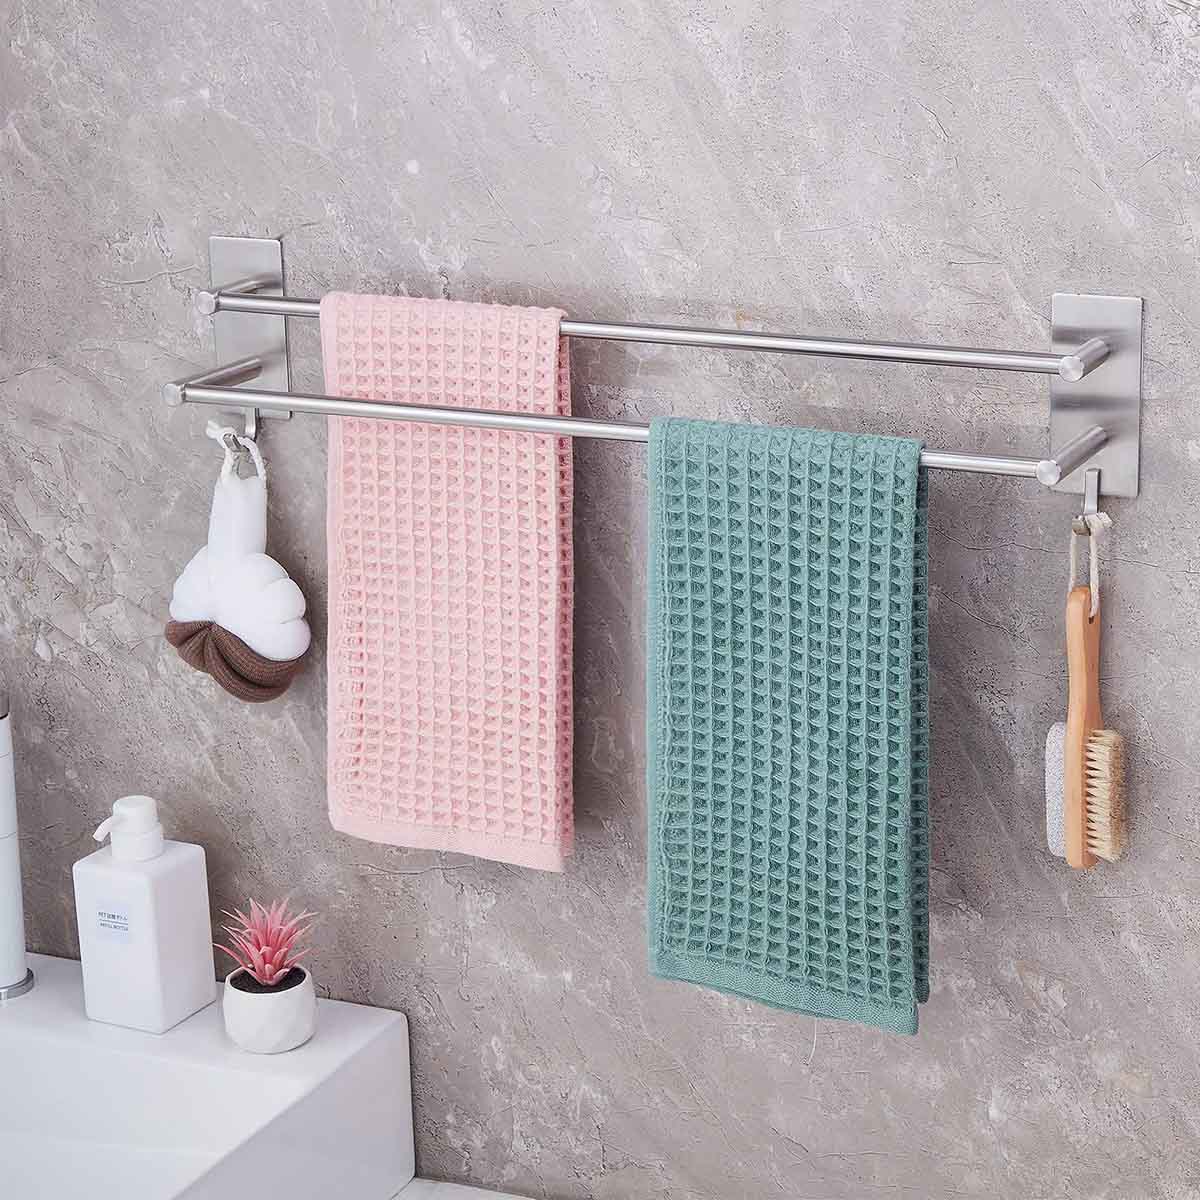 Where To Put Towel Rack In Bathroom